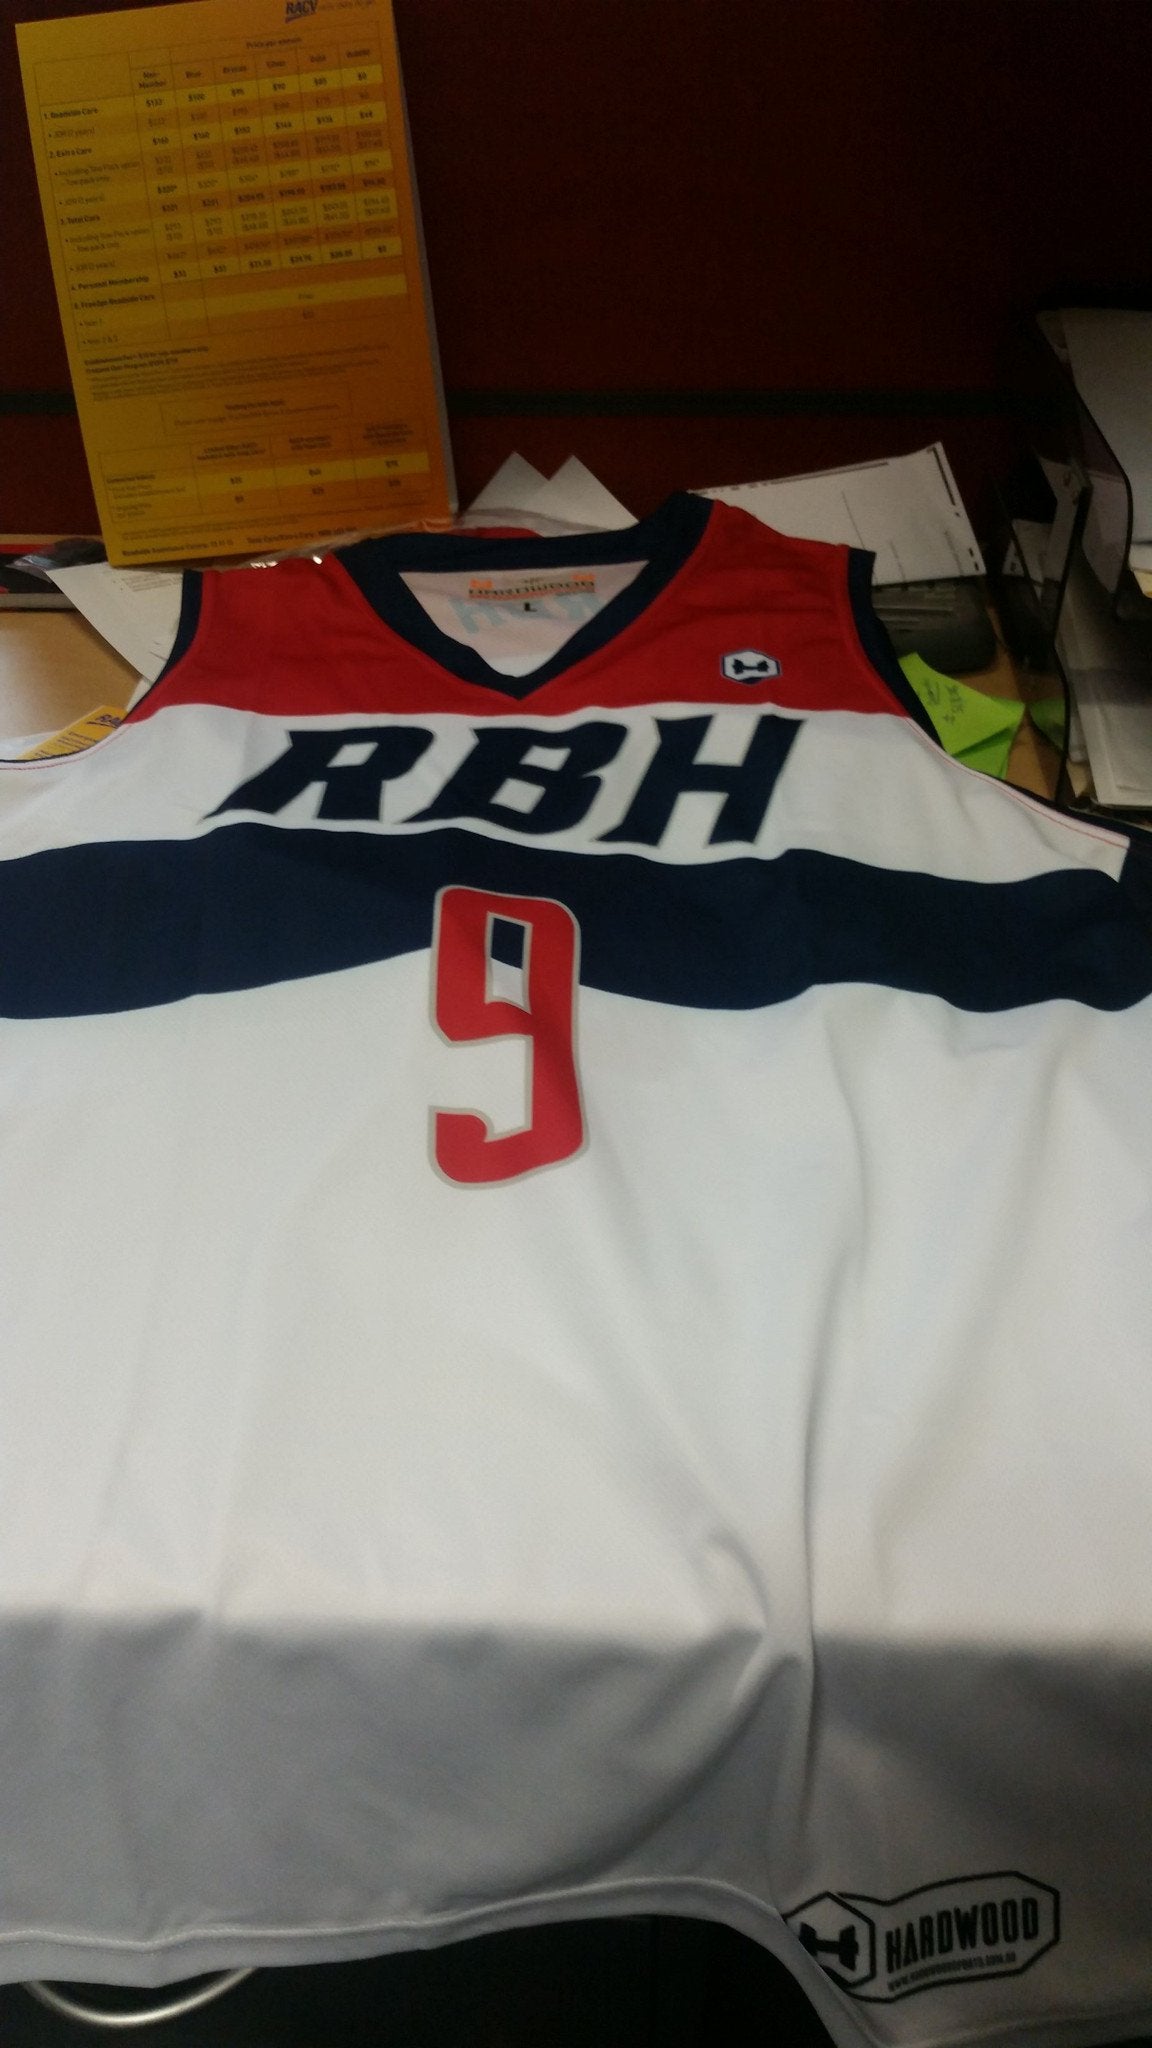 RBH Basketball Uniform Set